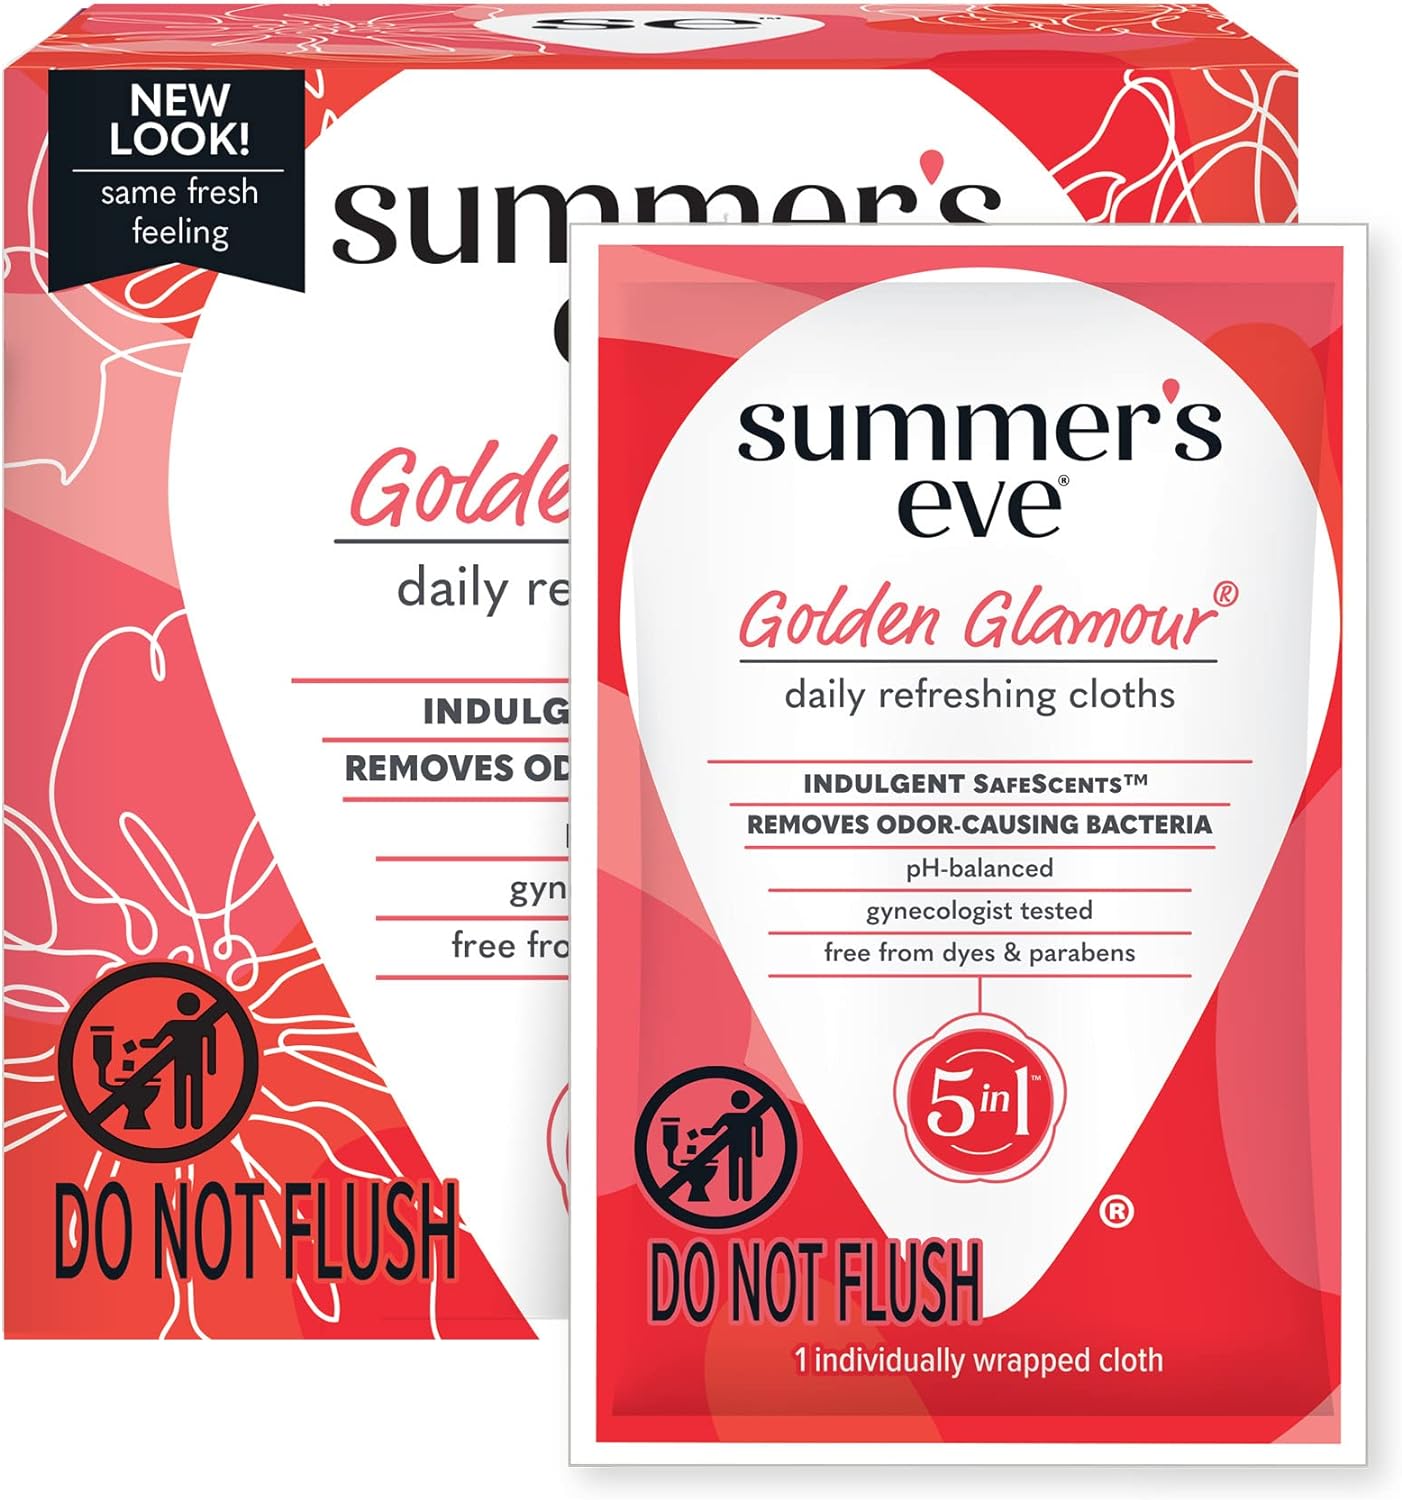 Summer's Eve Golden Glamour Daily Refreshing Feminine Wipes, Removes O